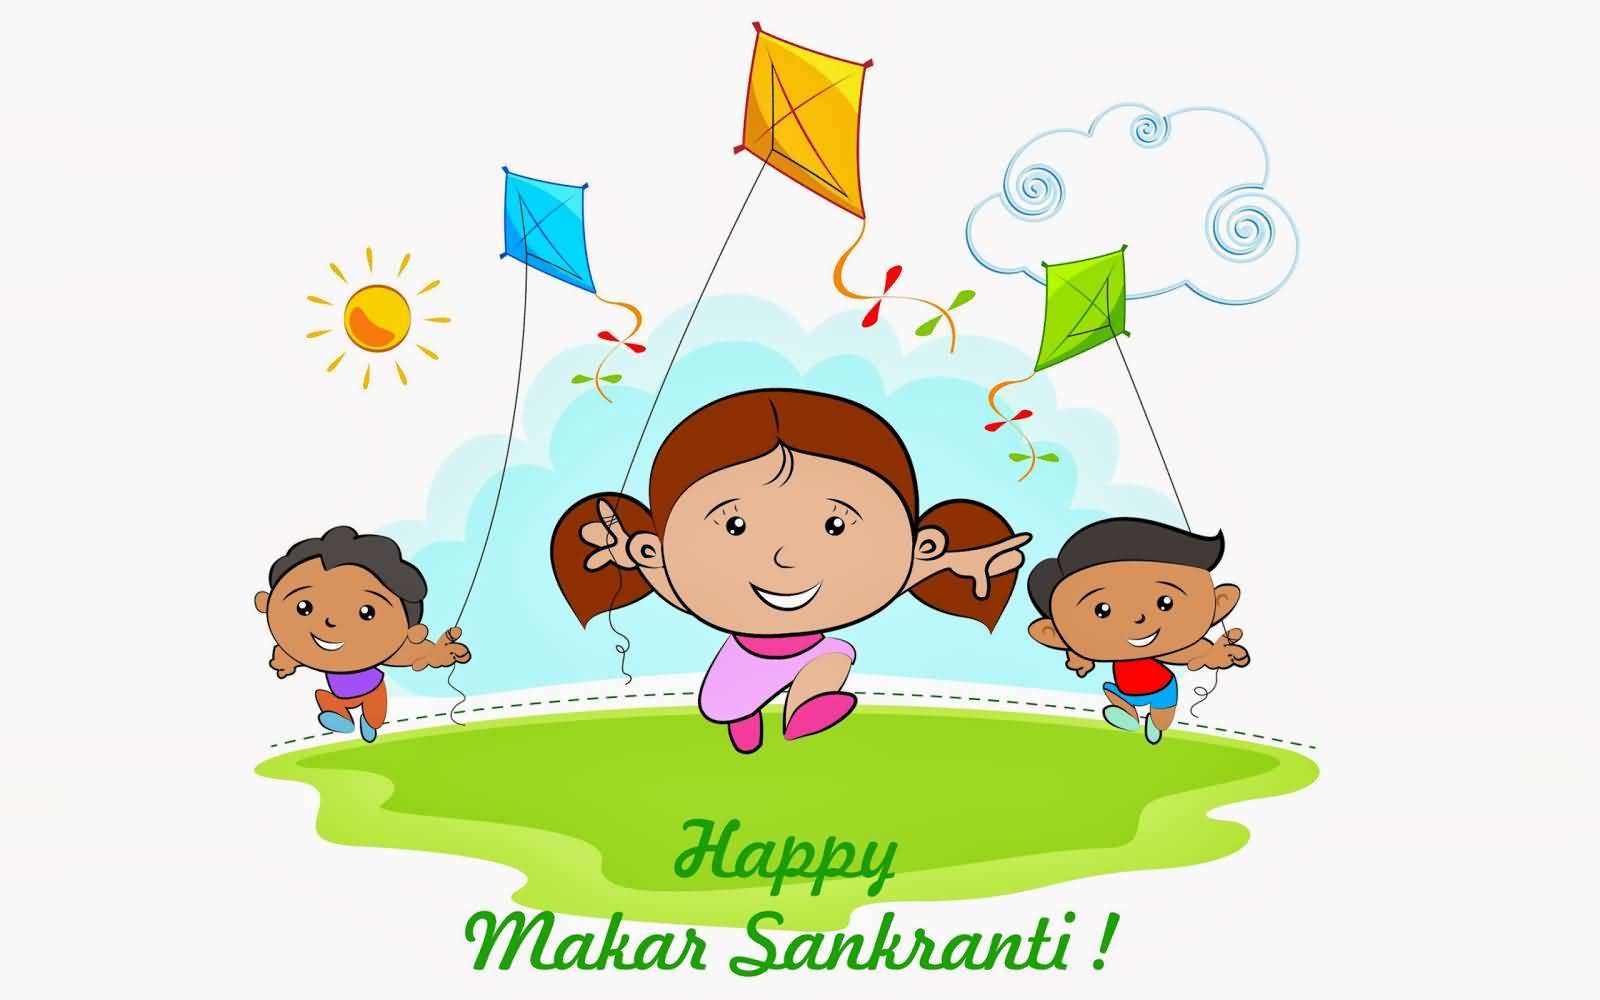 Happy Makar Sankranti Kids Flying Kite Illustration